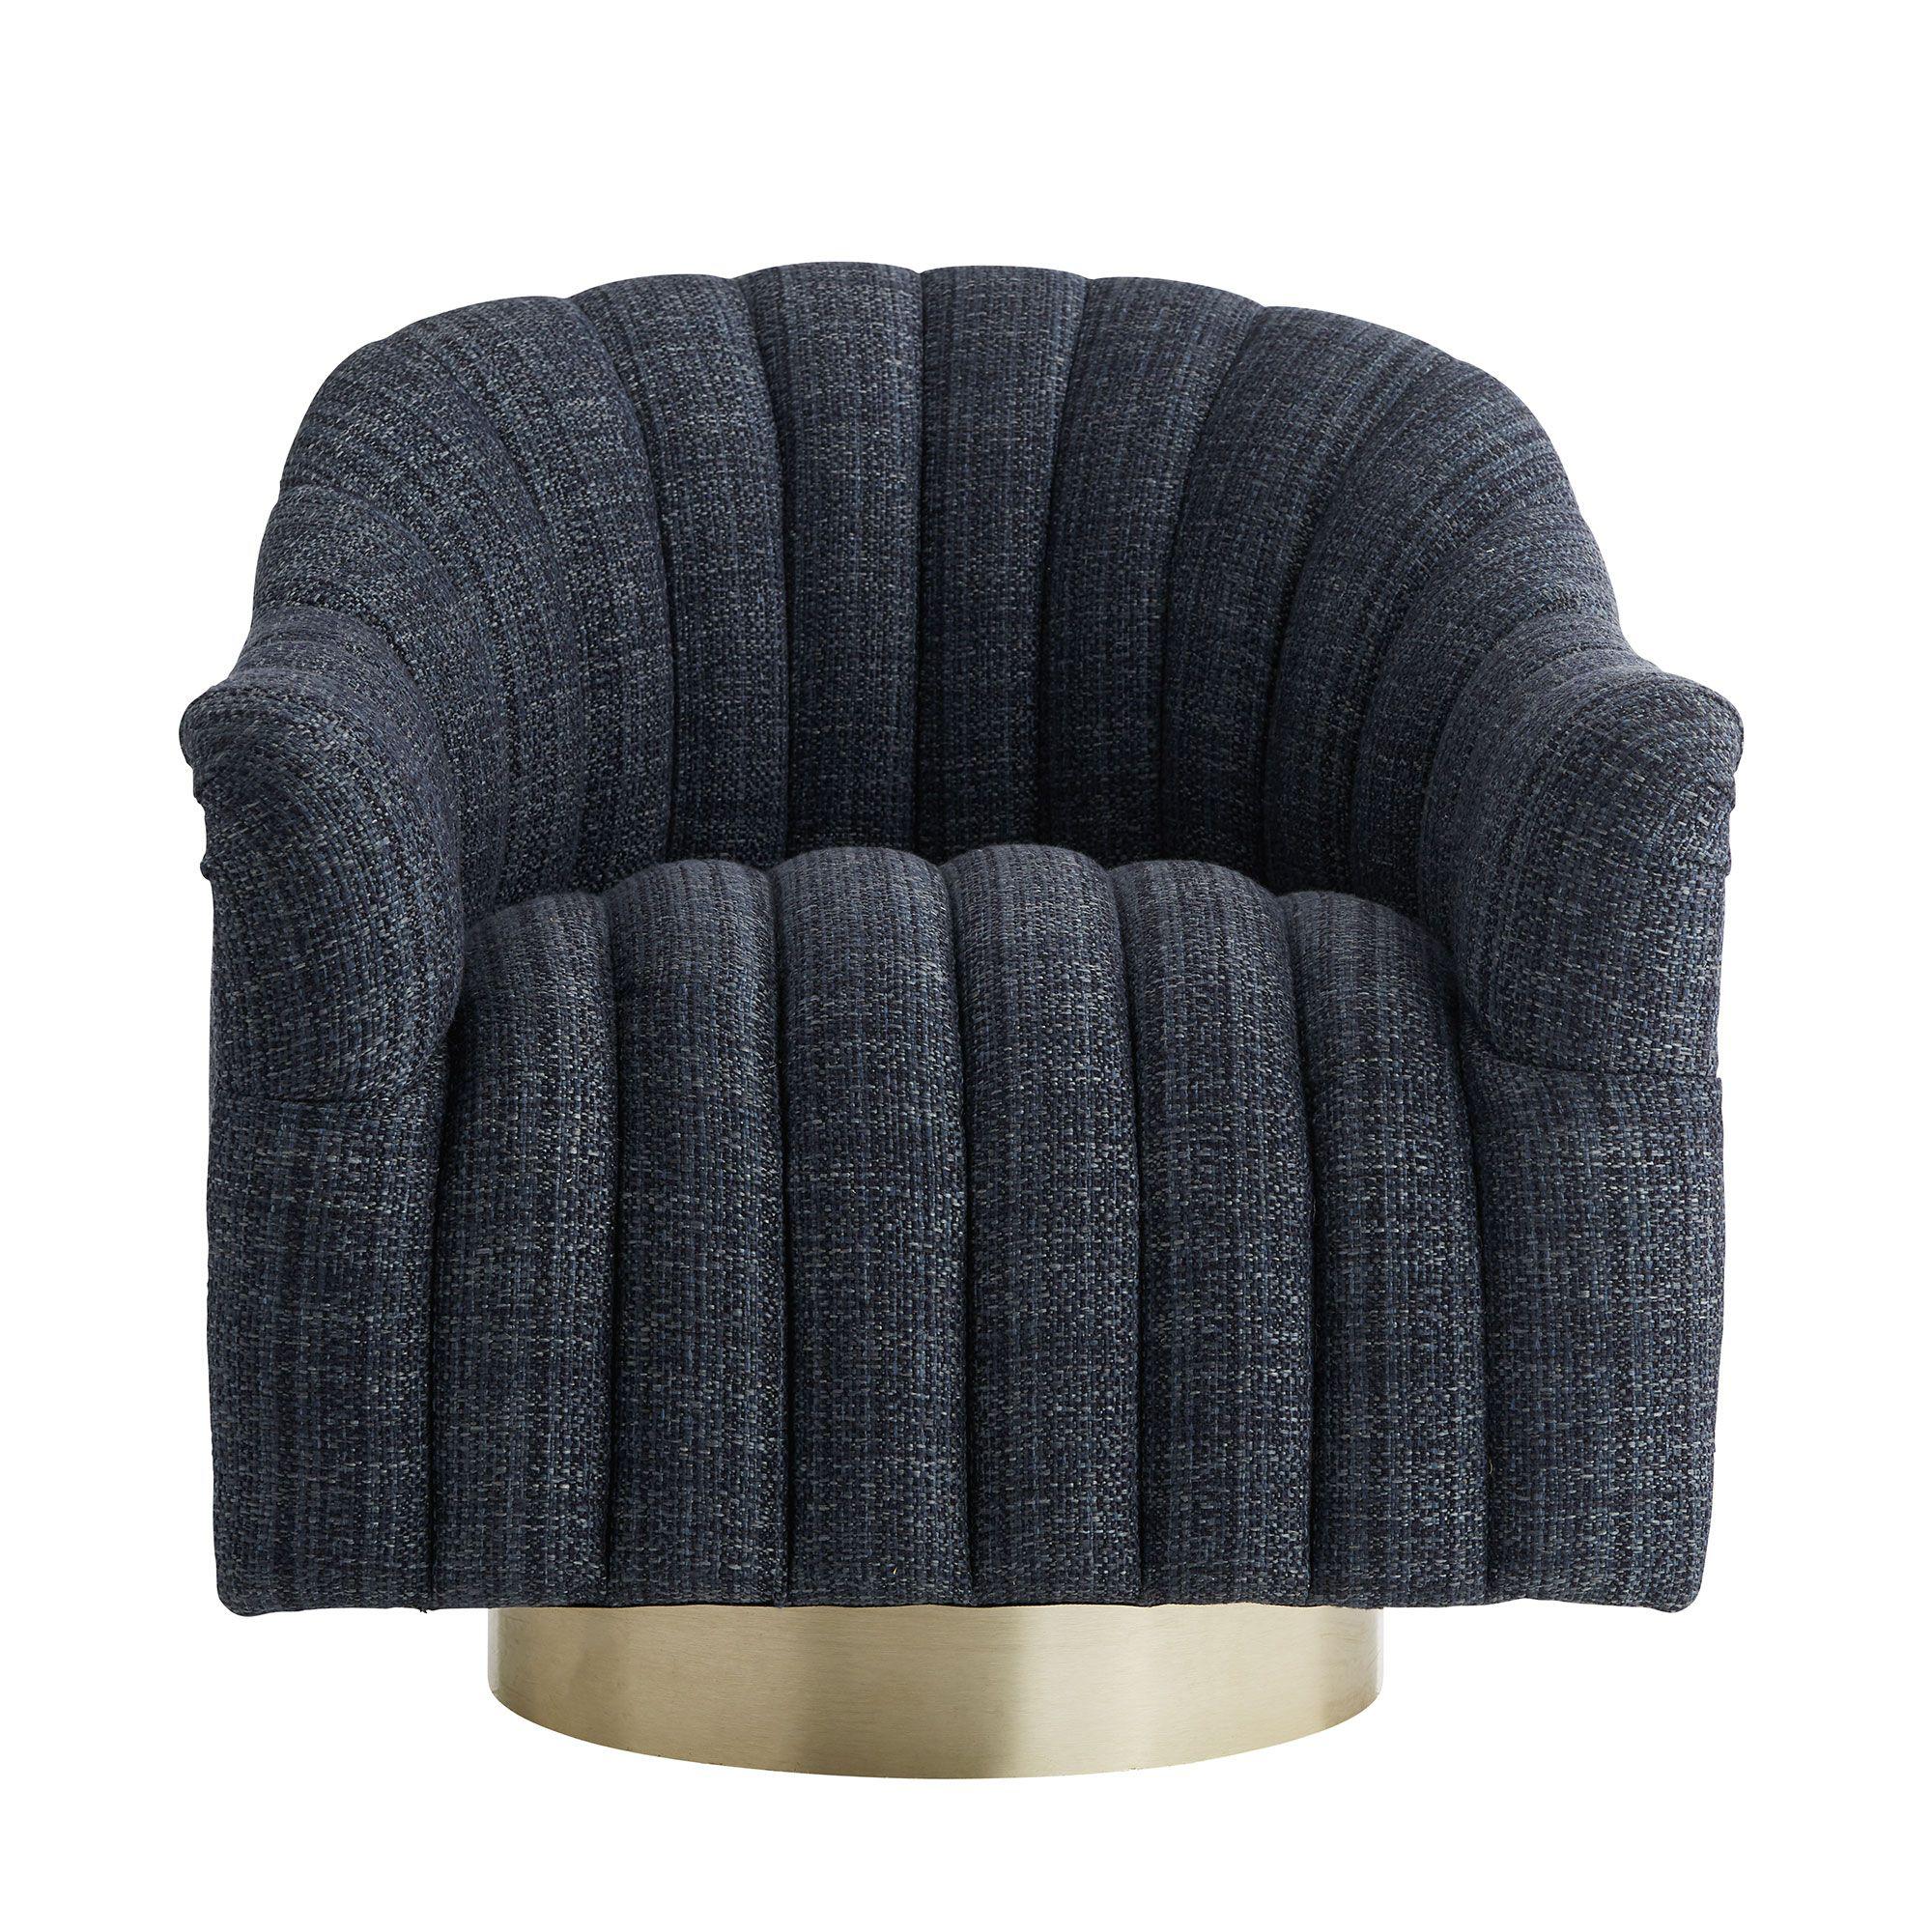 Купить Кресло Springsteen Chair Indigo Tweed Champagne Swivel в интернет-магазине roooms.ru